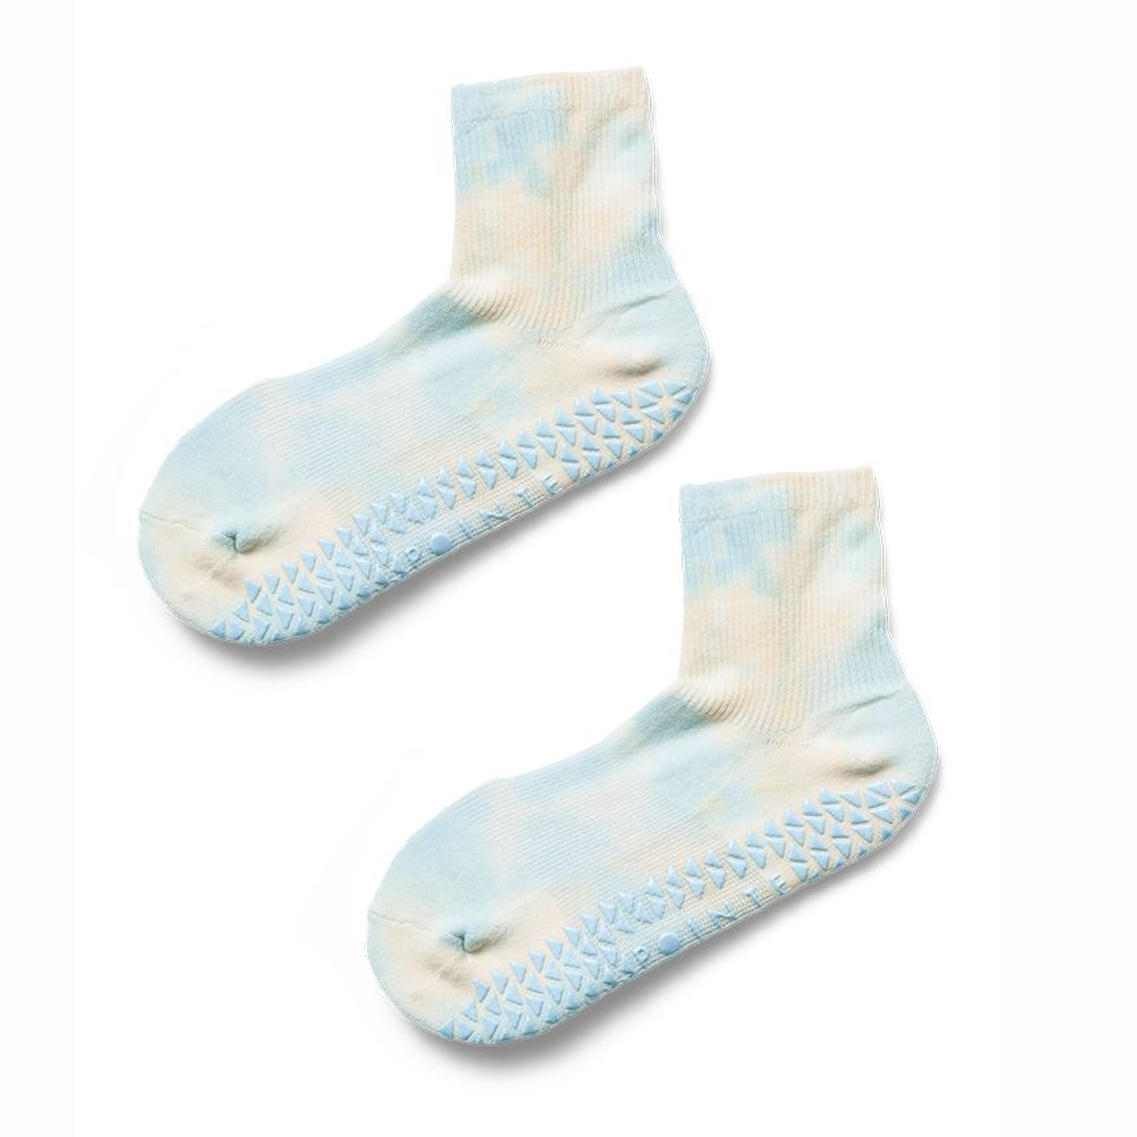 Honey_Louts mens non-slip grip socks for yoga, pilates, hospital, anti-skid slipper  socks on home barre workout sports